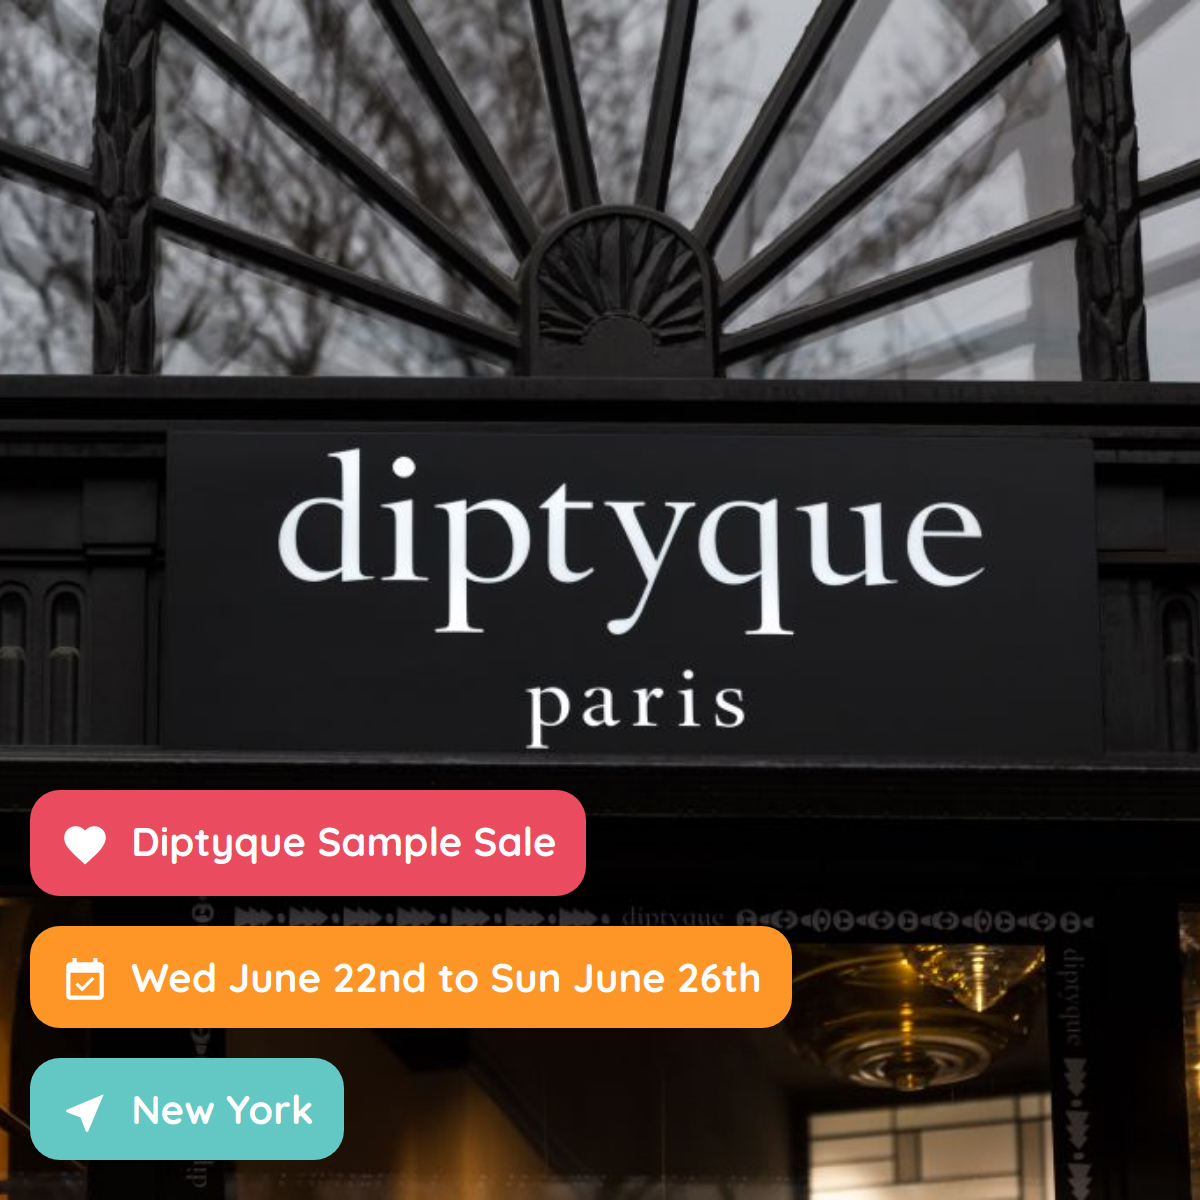 Diptyque Sample Sale, New York, June 2022